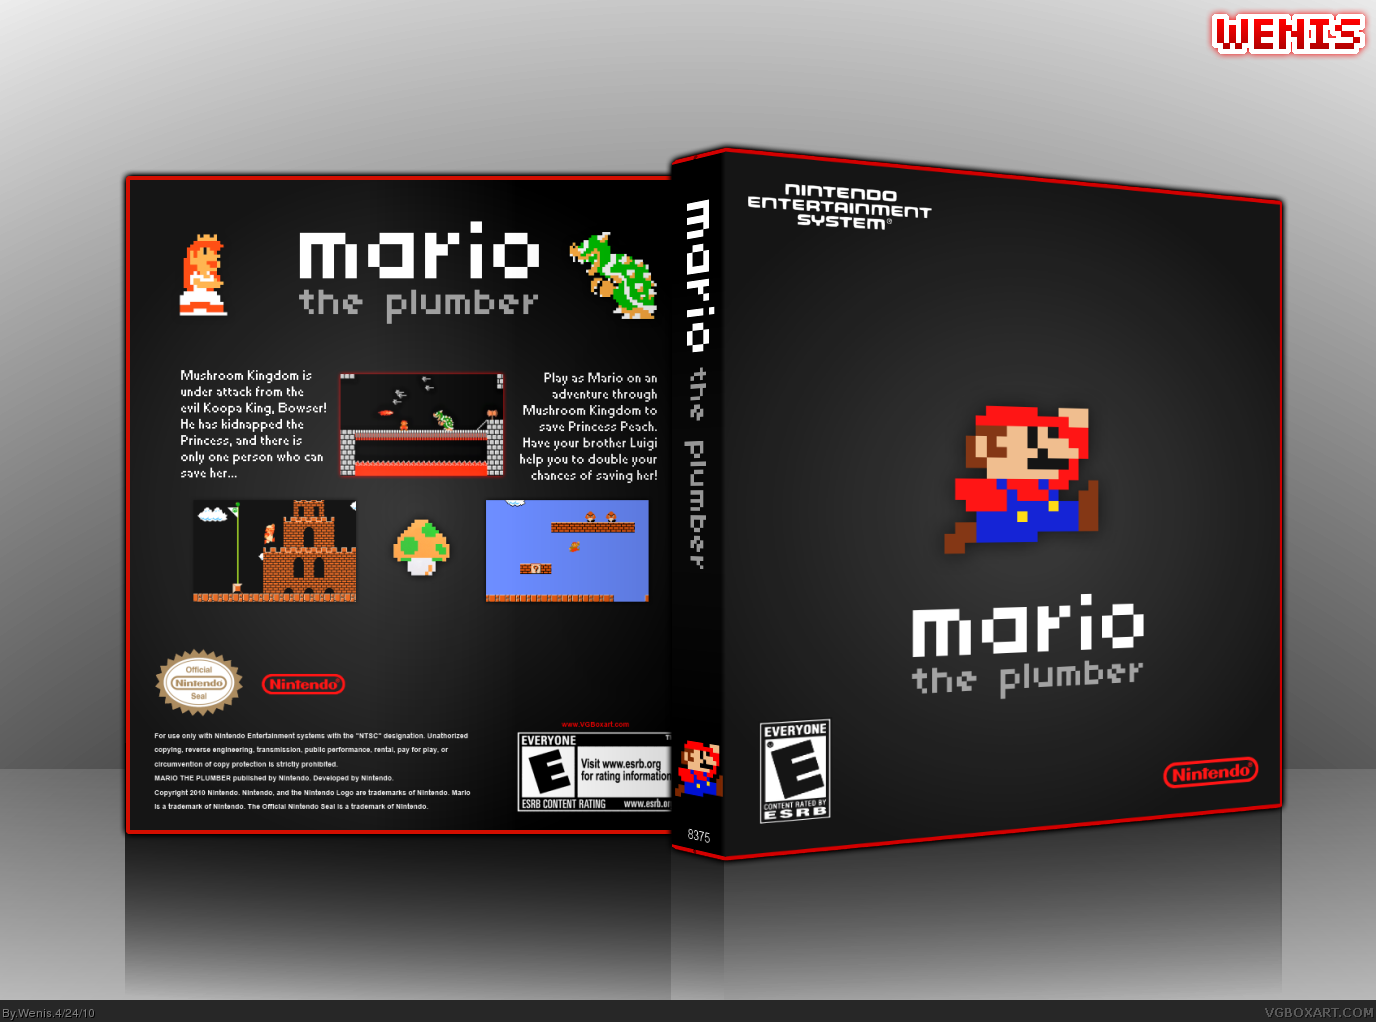 Super Mario Bros. box cover